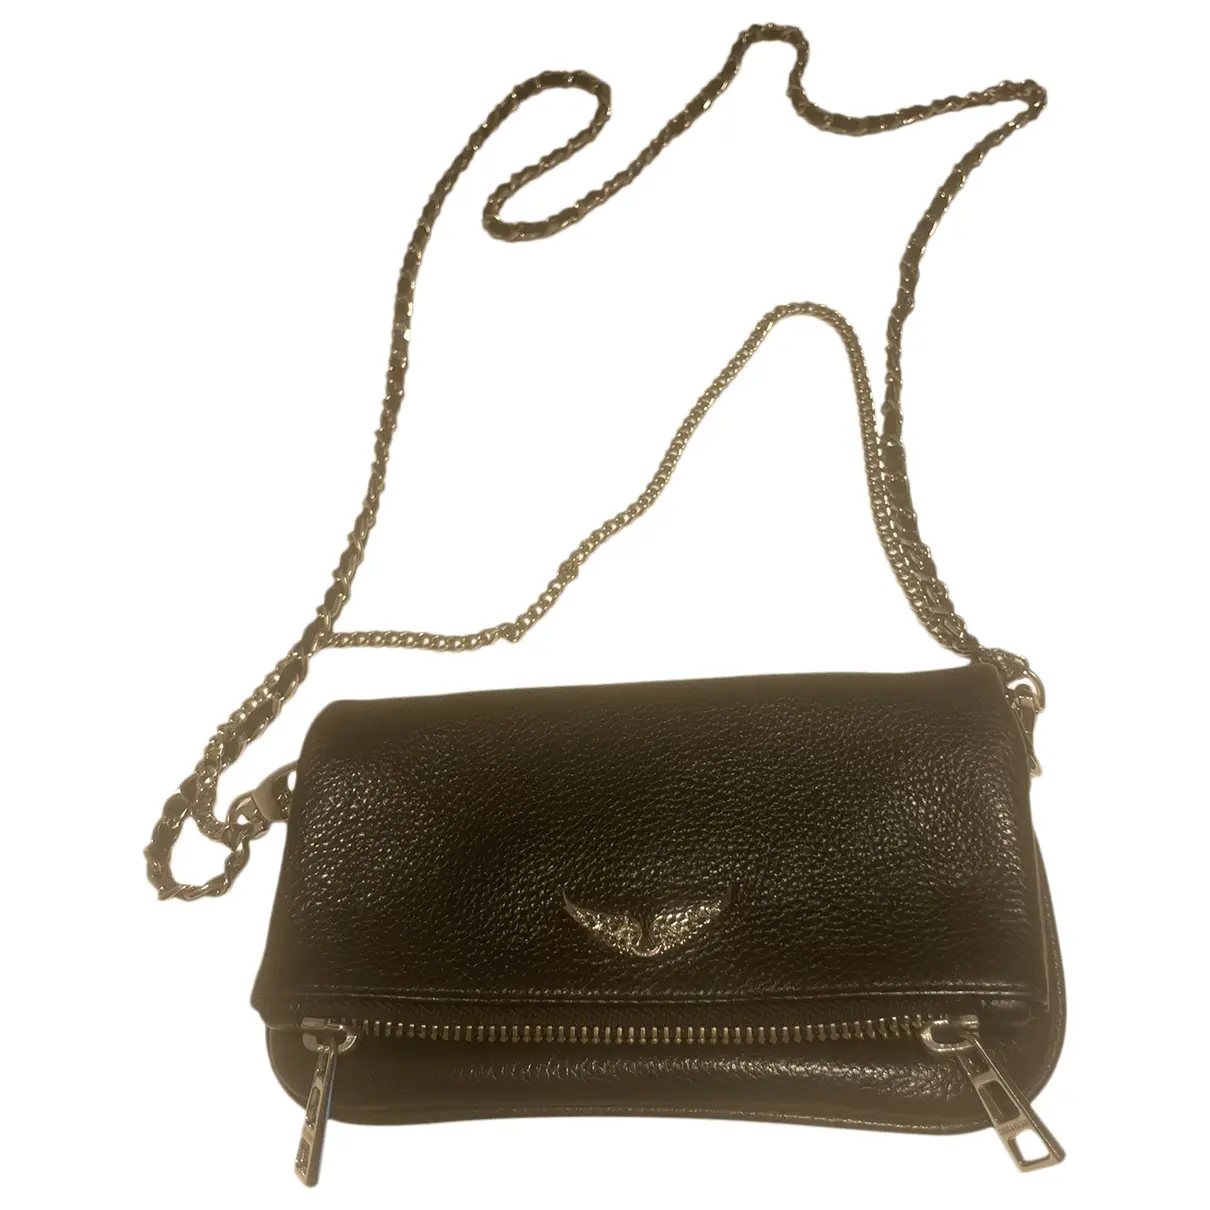 Rock leather clutch bag